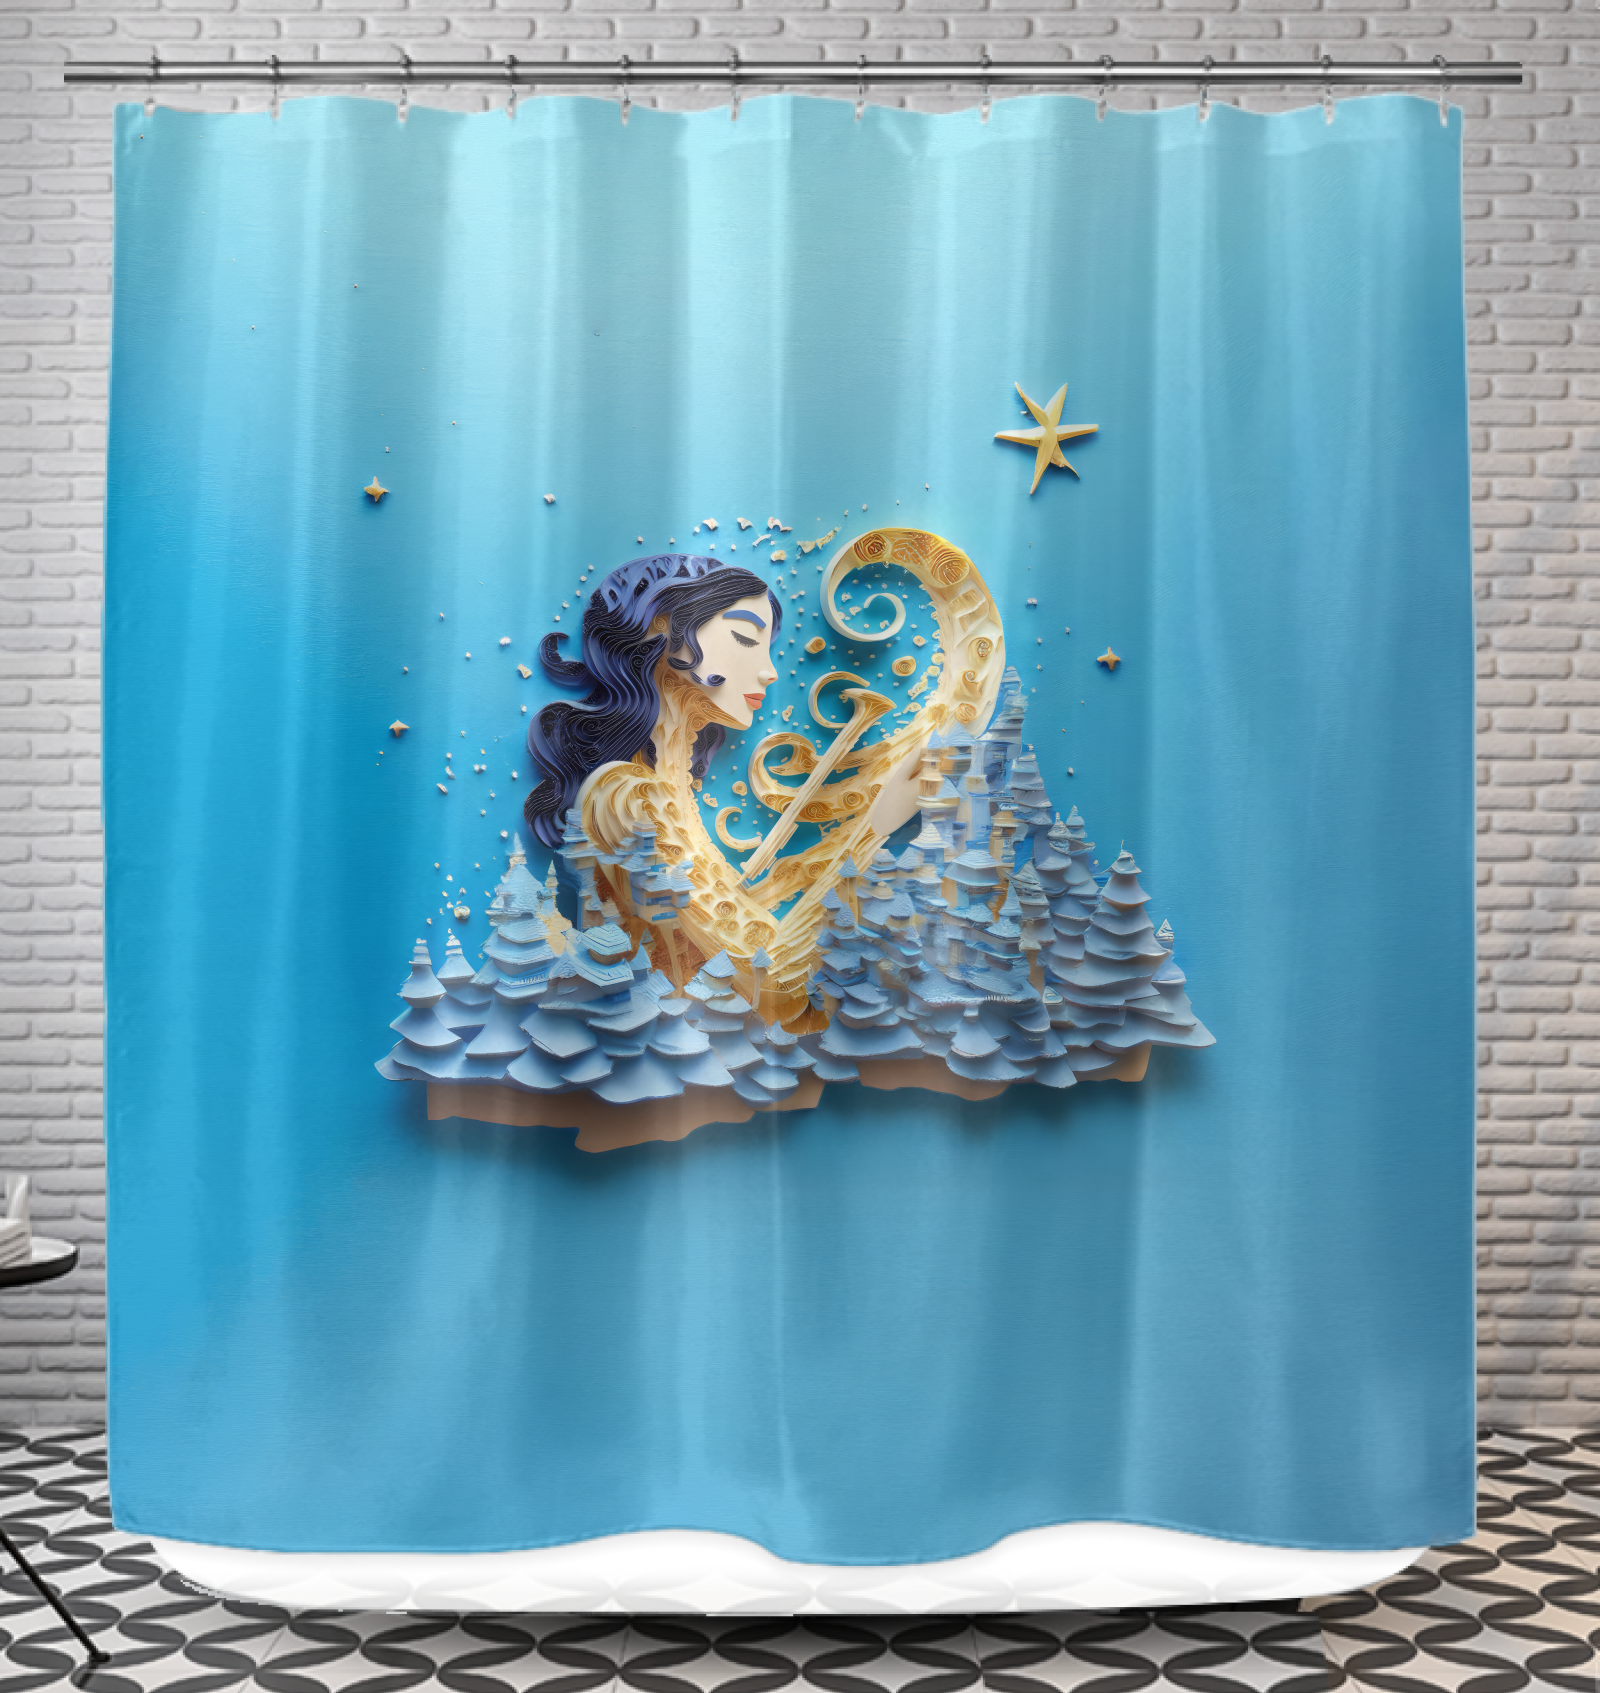 Oceanic Adventure Shower Curtain with vibrant ocean design.